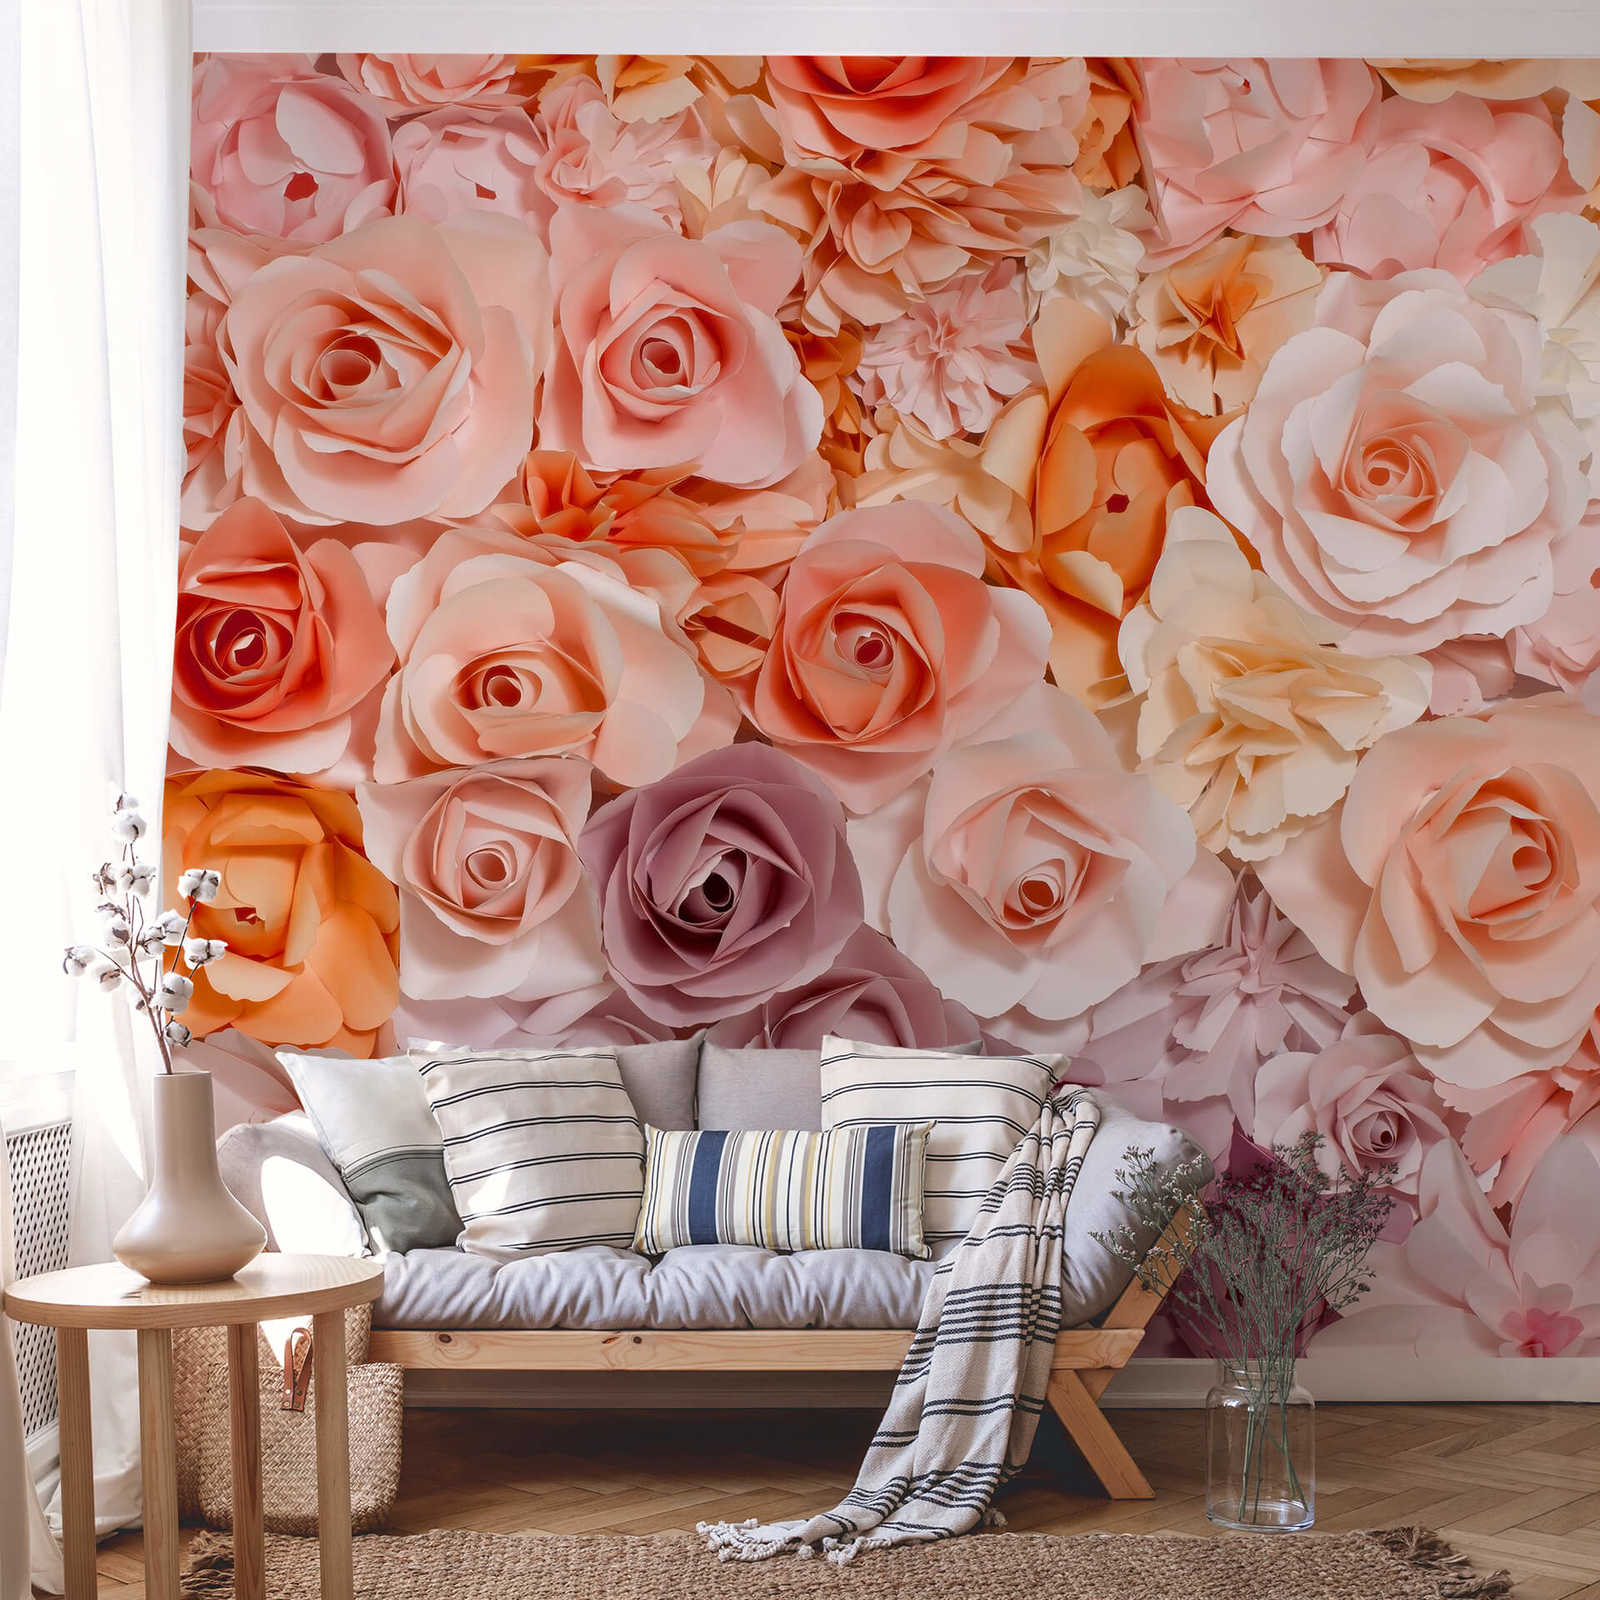             Carta da parati Roses - Motivo floreale 3D - Rosa, bianco, arancione
        